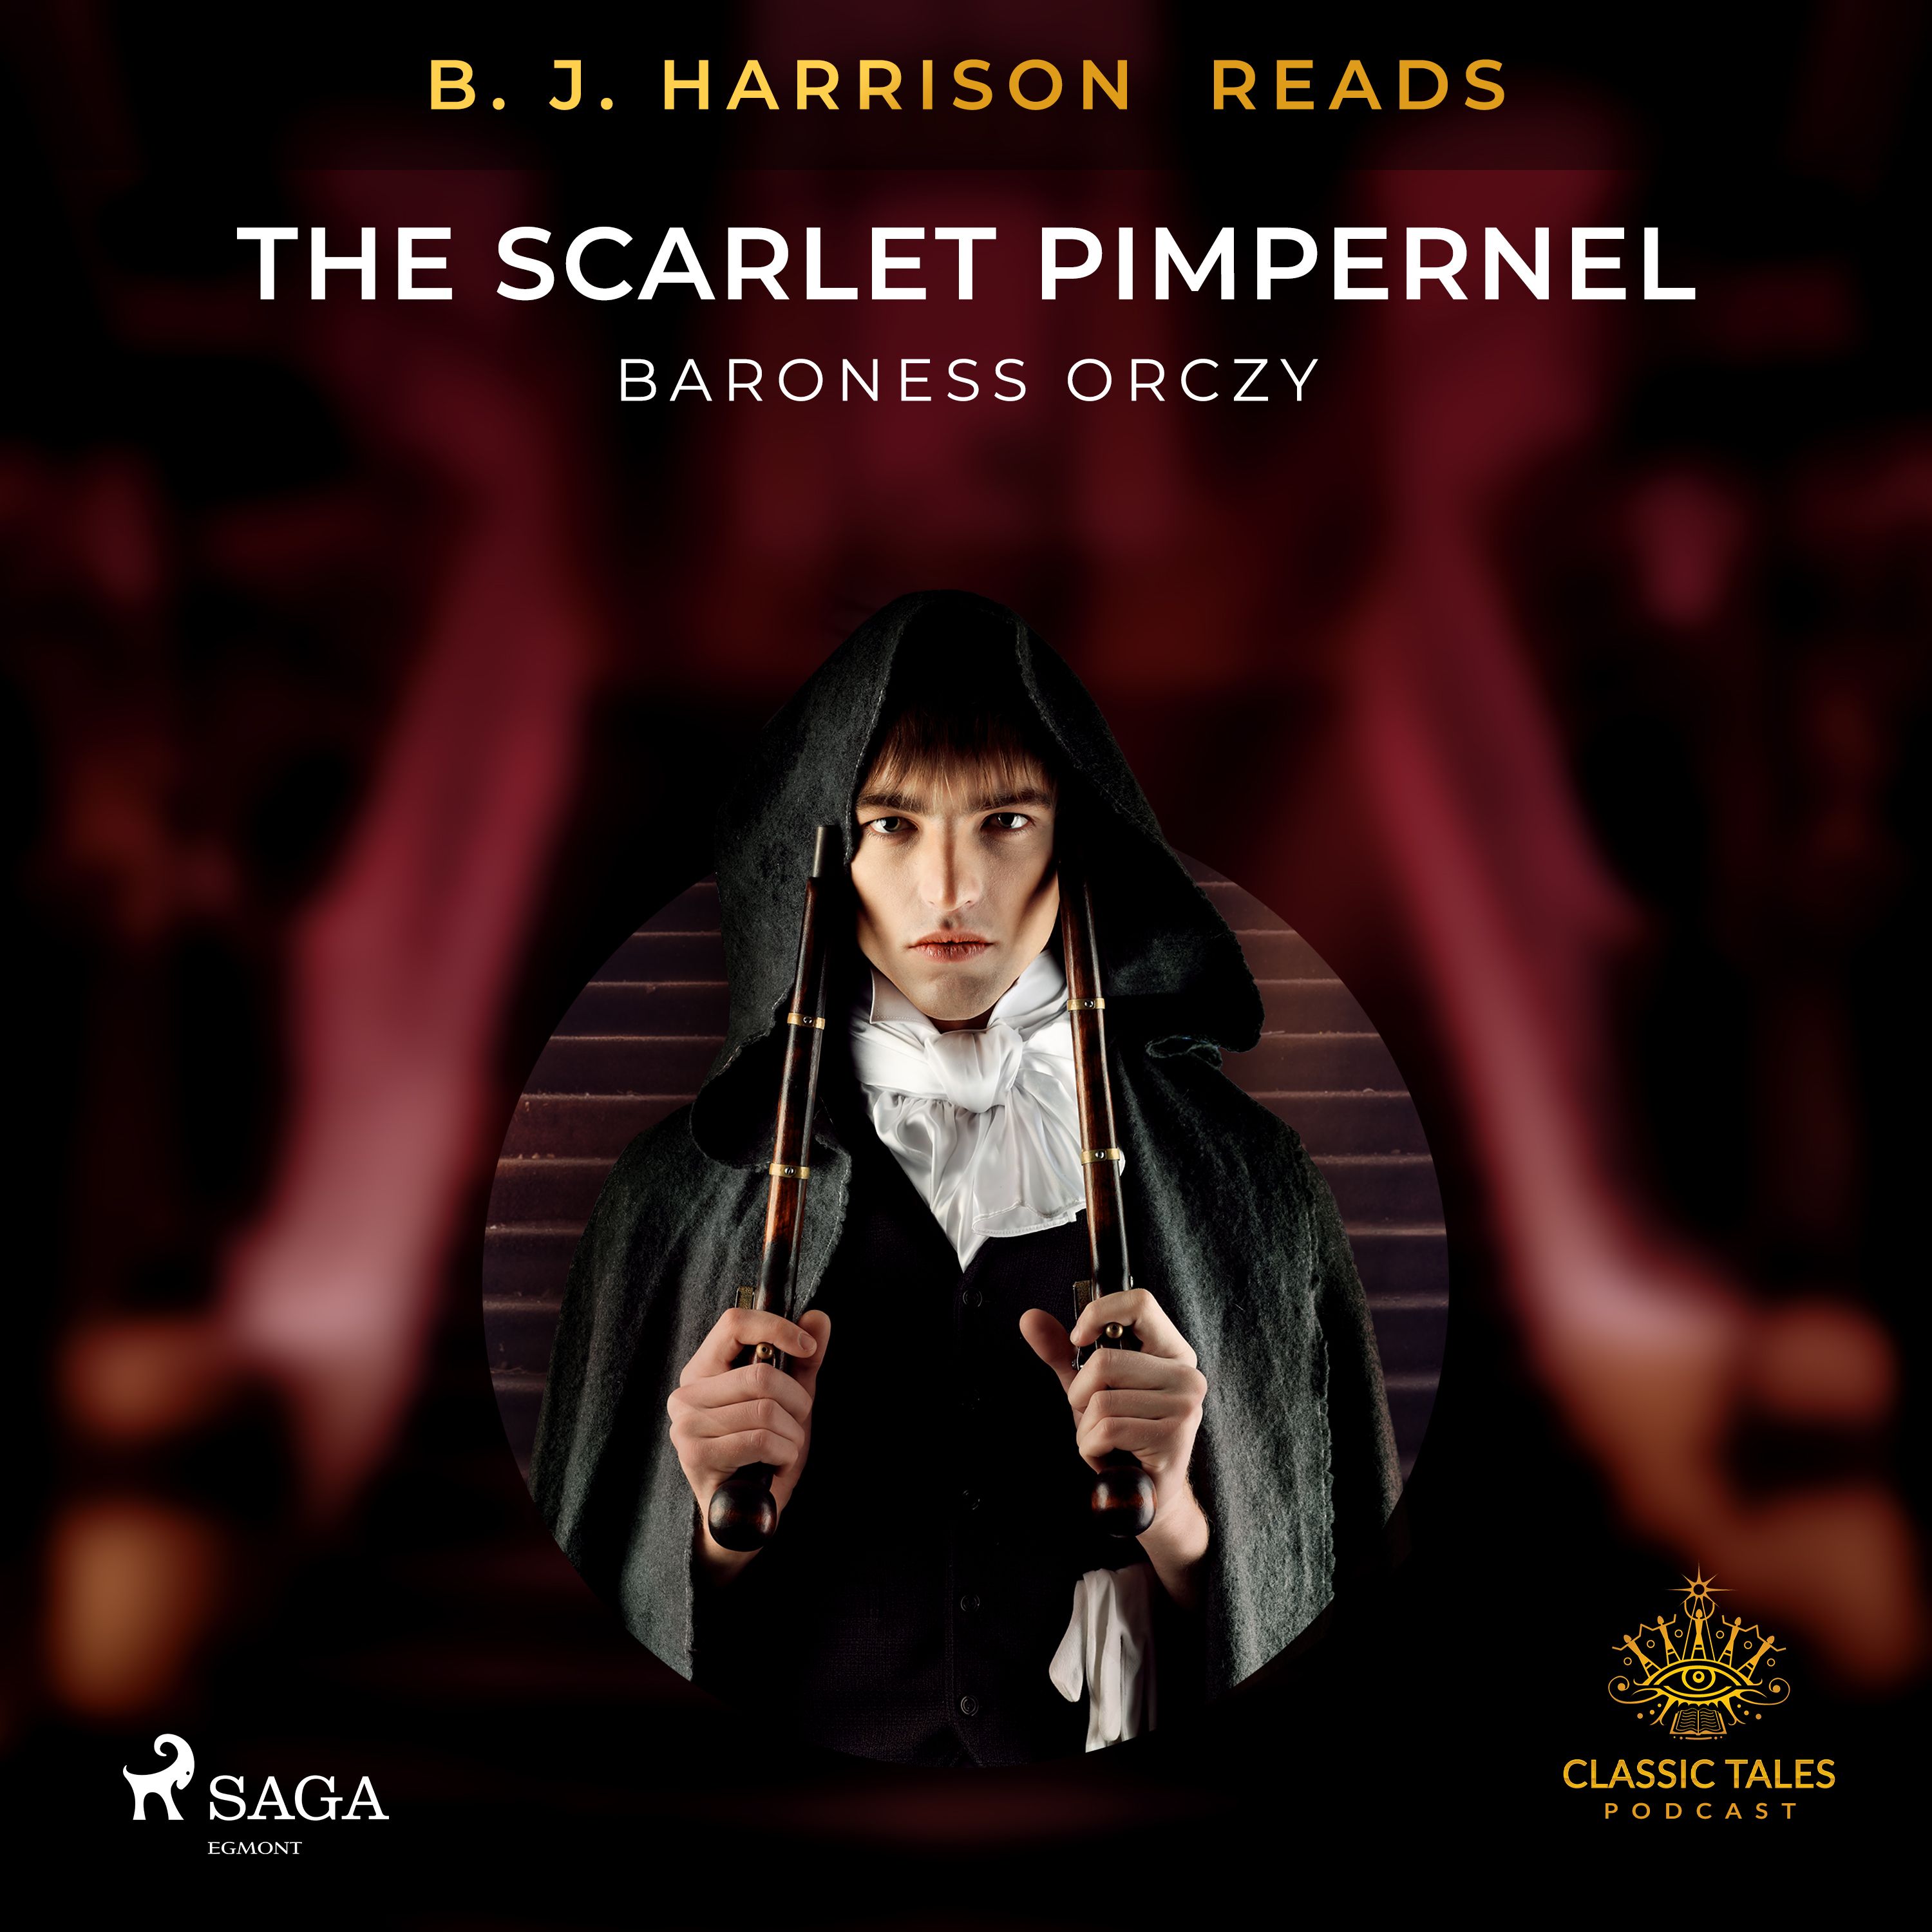 B. J. Harrison Reads The Scarlet Pimpernel, ljudbok av Baroness Orczy